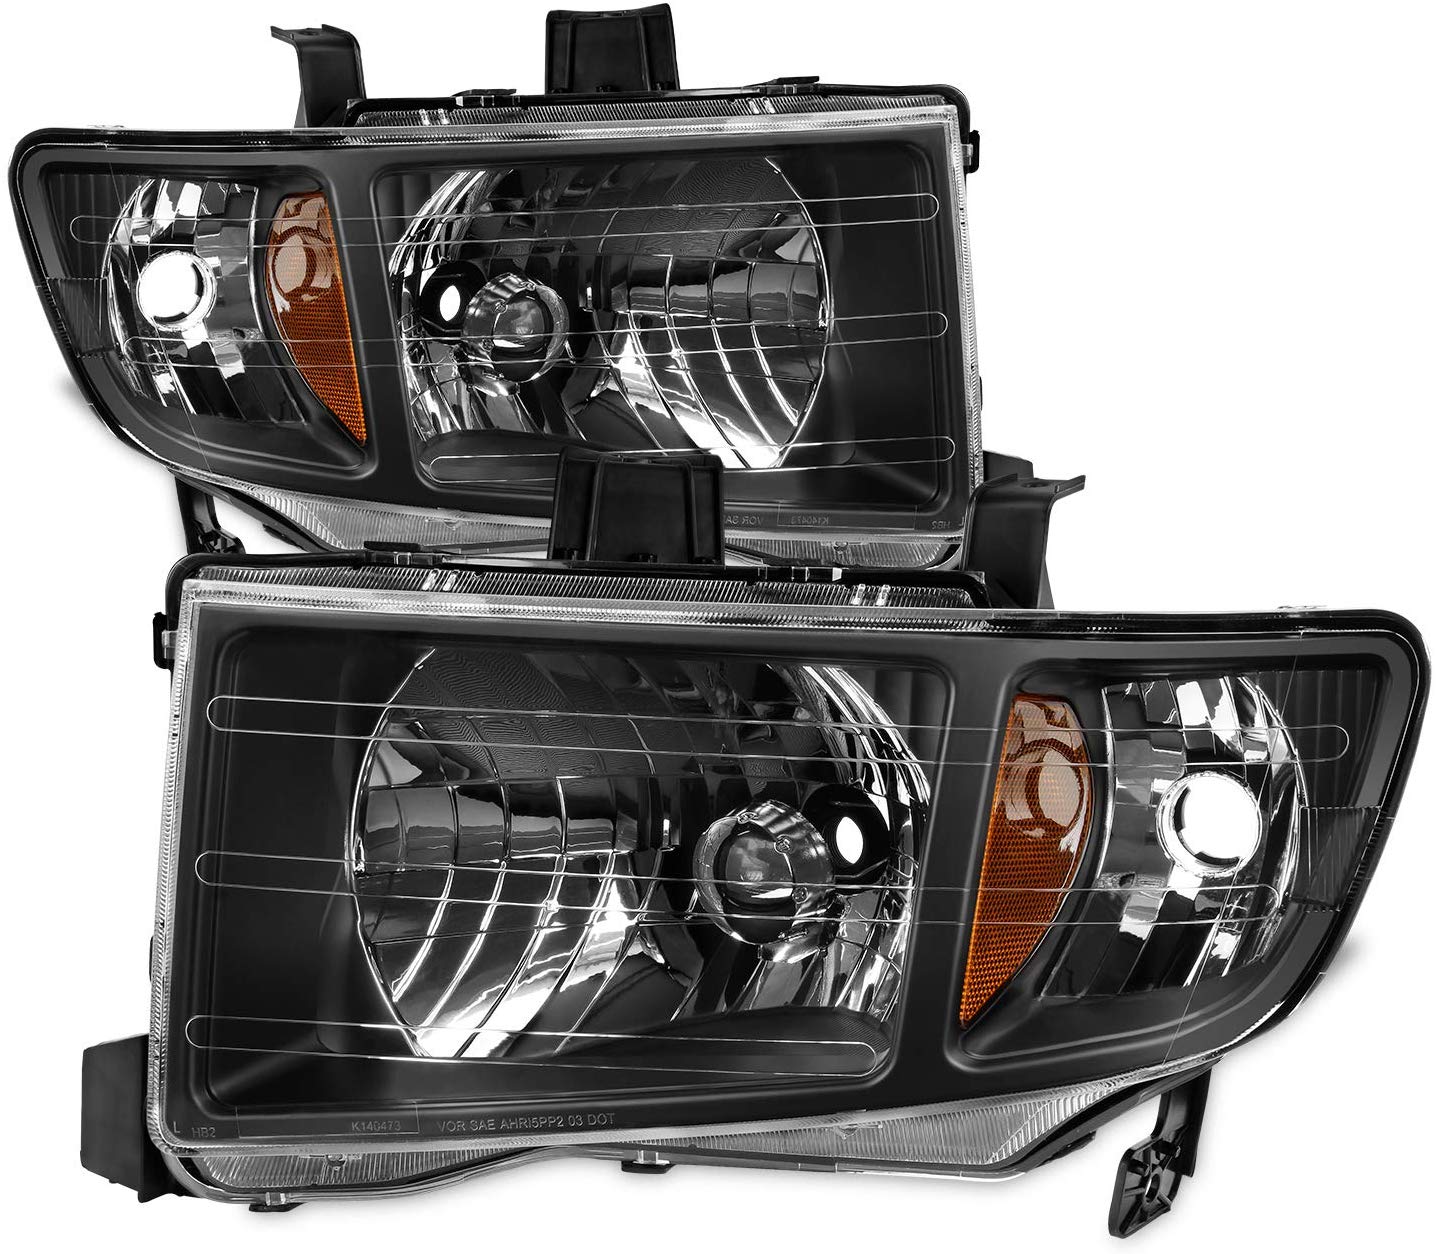 For Honda Ridgeline OE Replacement Black Bezel Headlights Driver/Passenger Head Lamps Pair New